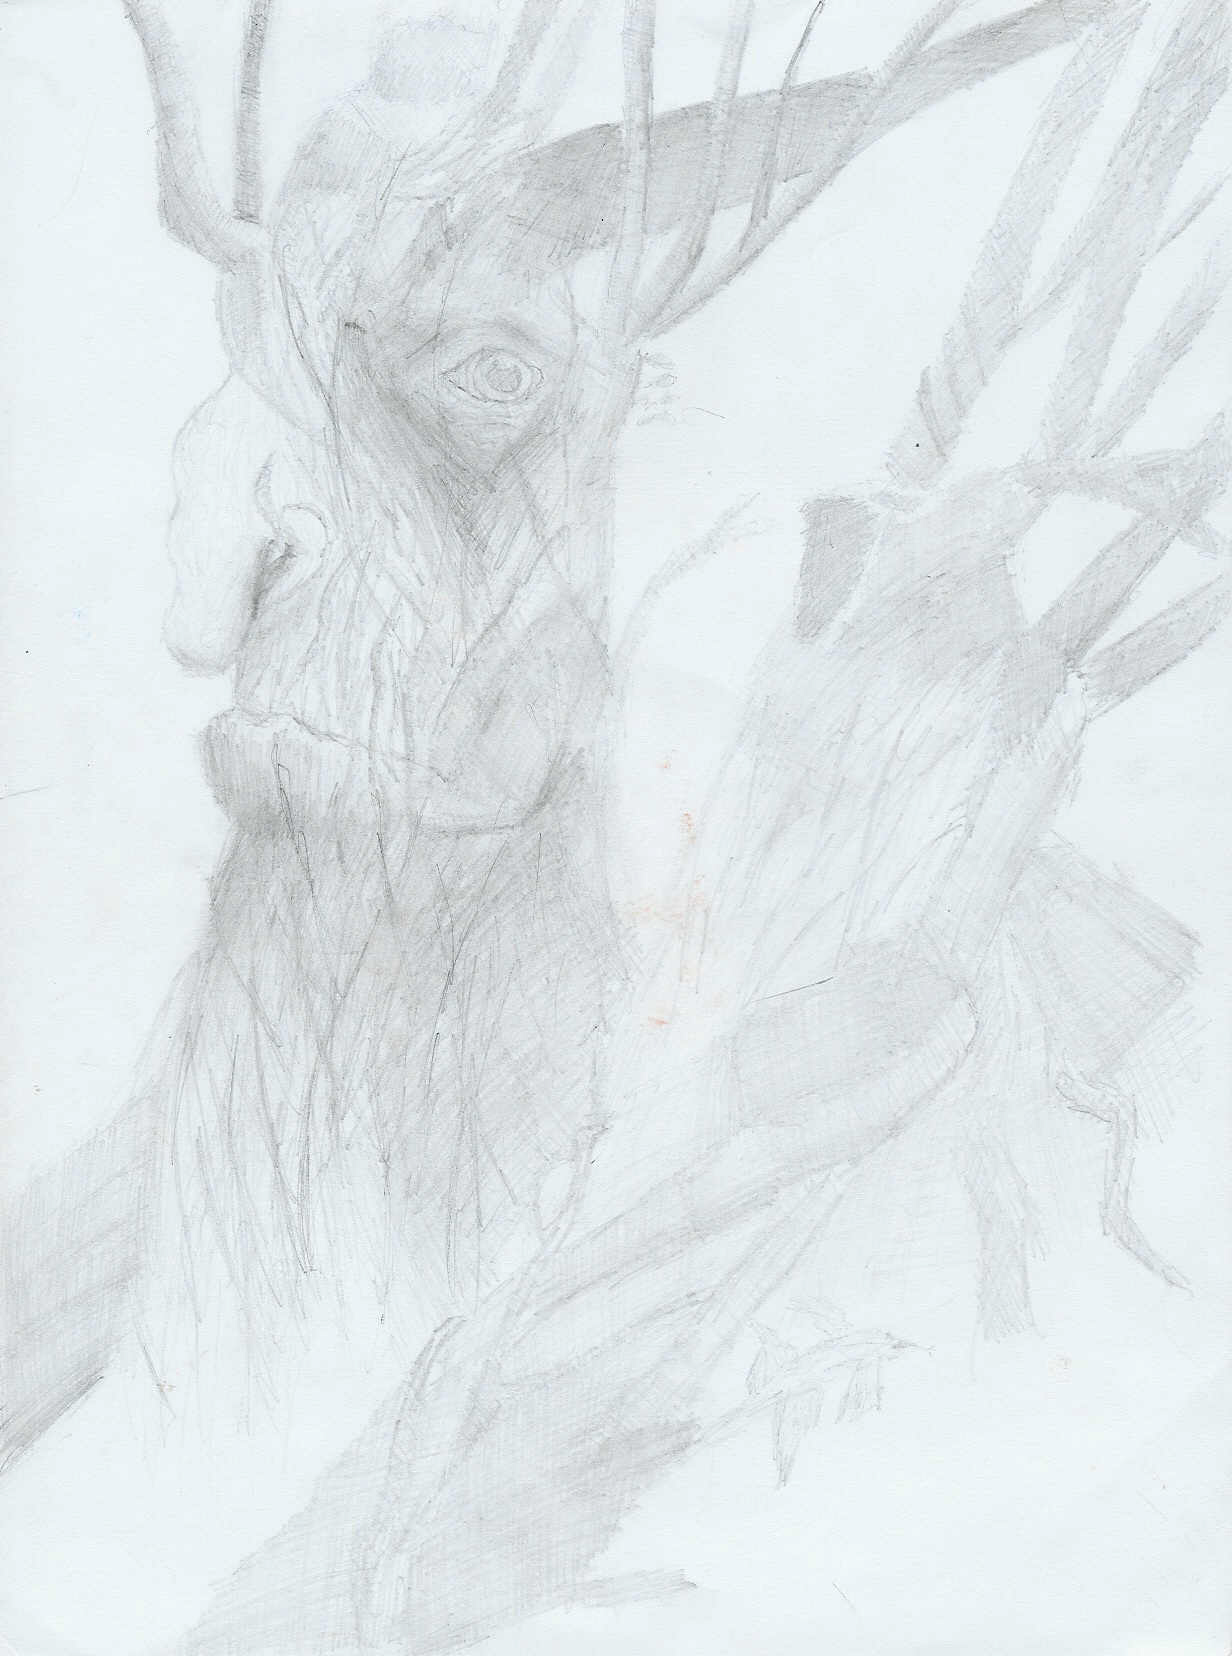 Treebeard by jeff_ooh_a_tree